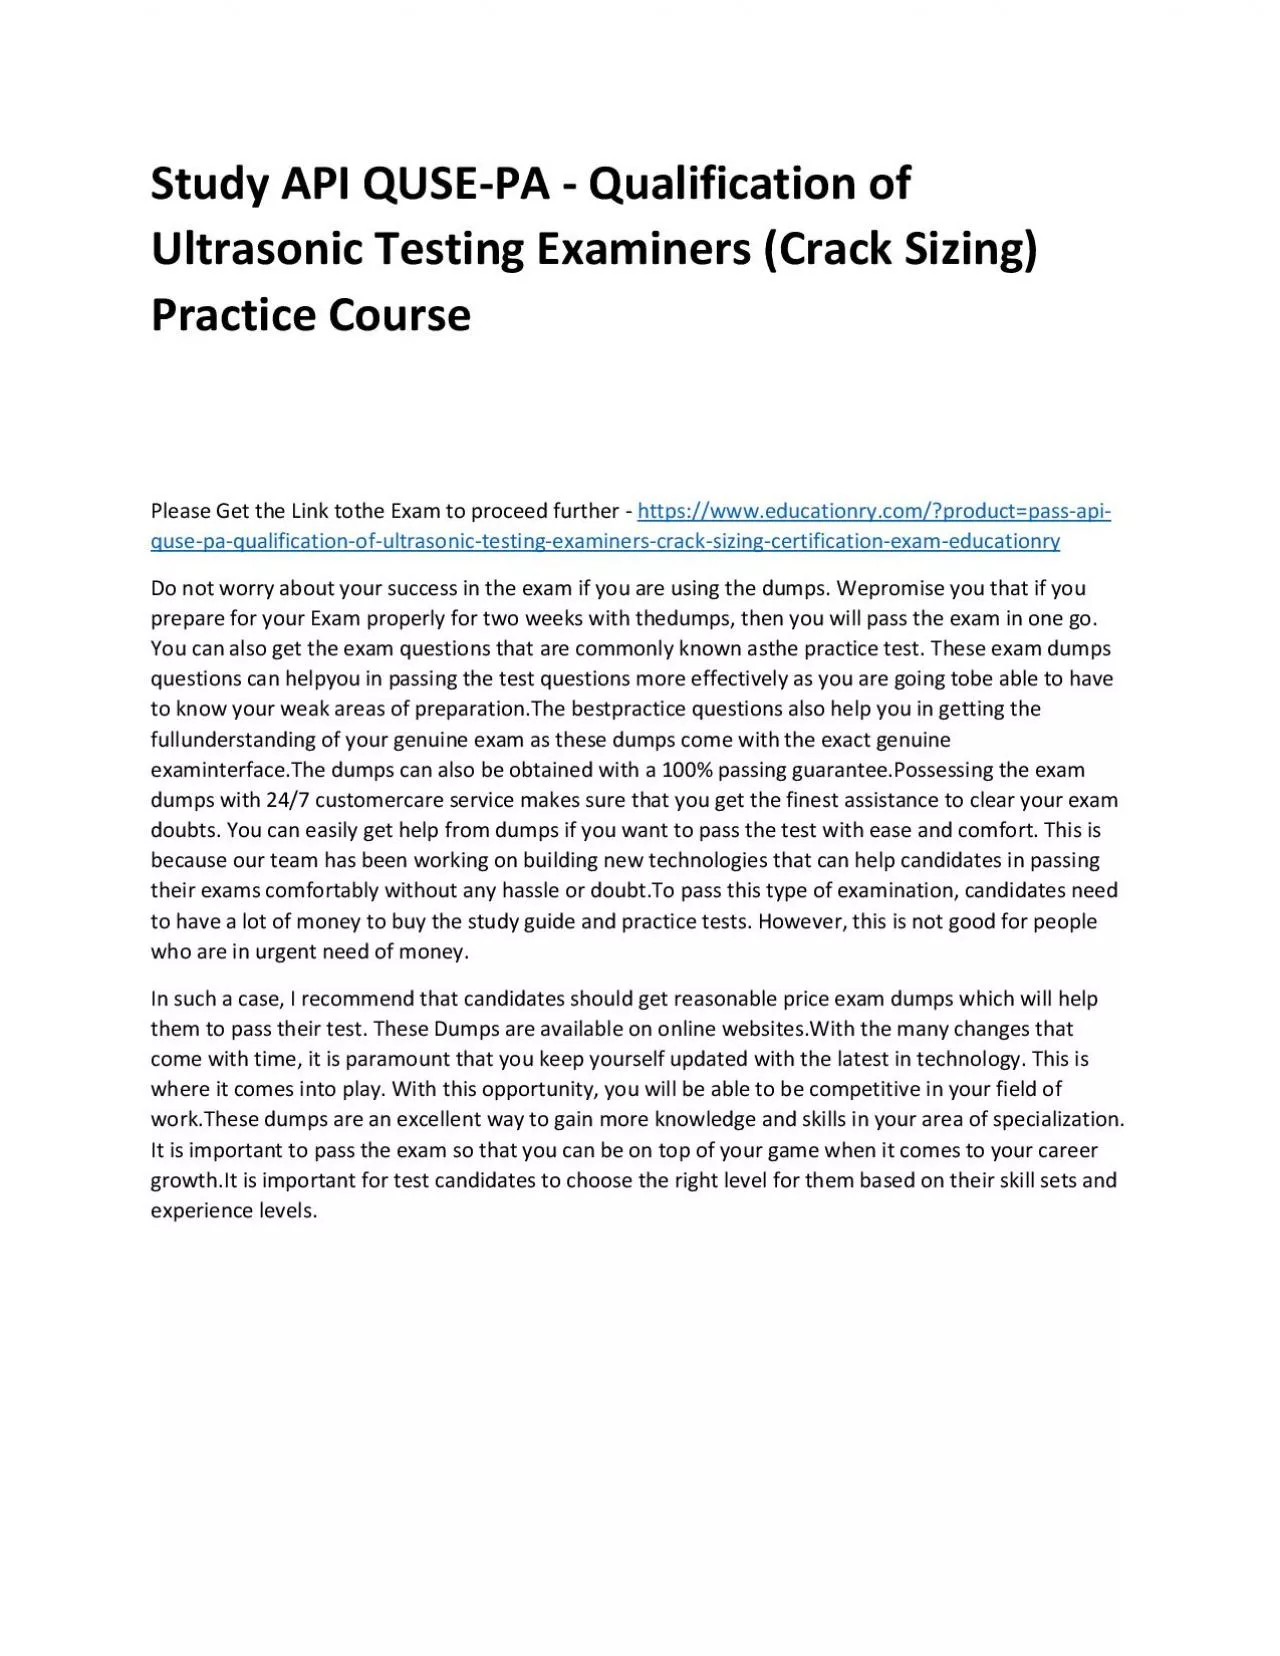 API QUSE-PA - Qualification of Ultrasonic Testing Examiners (Crack Sizing)